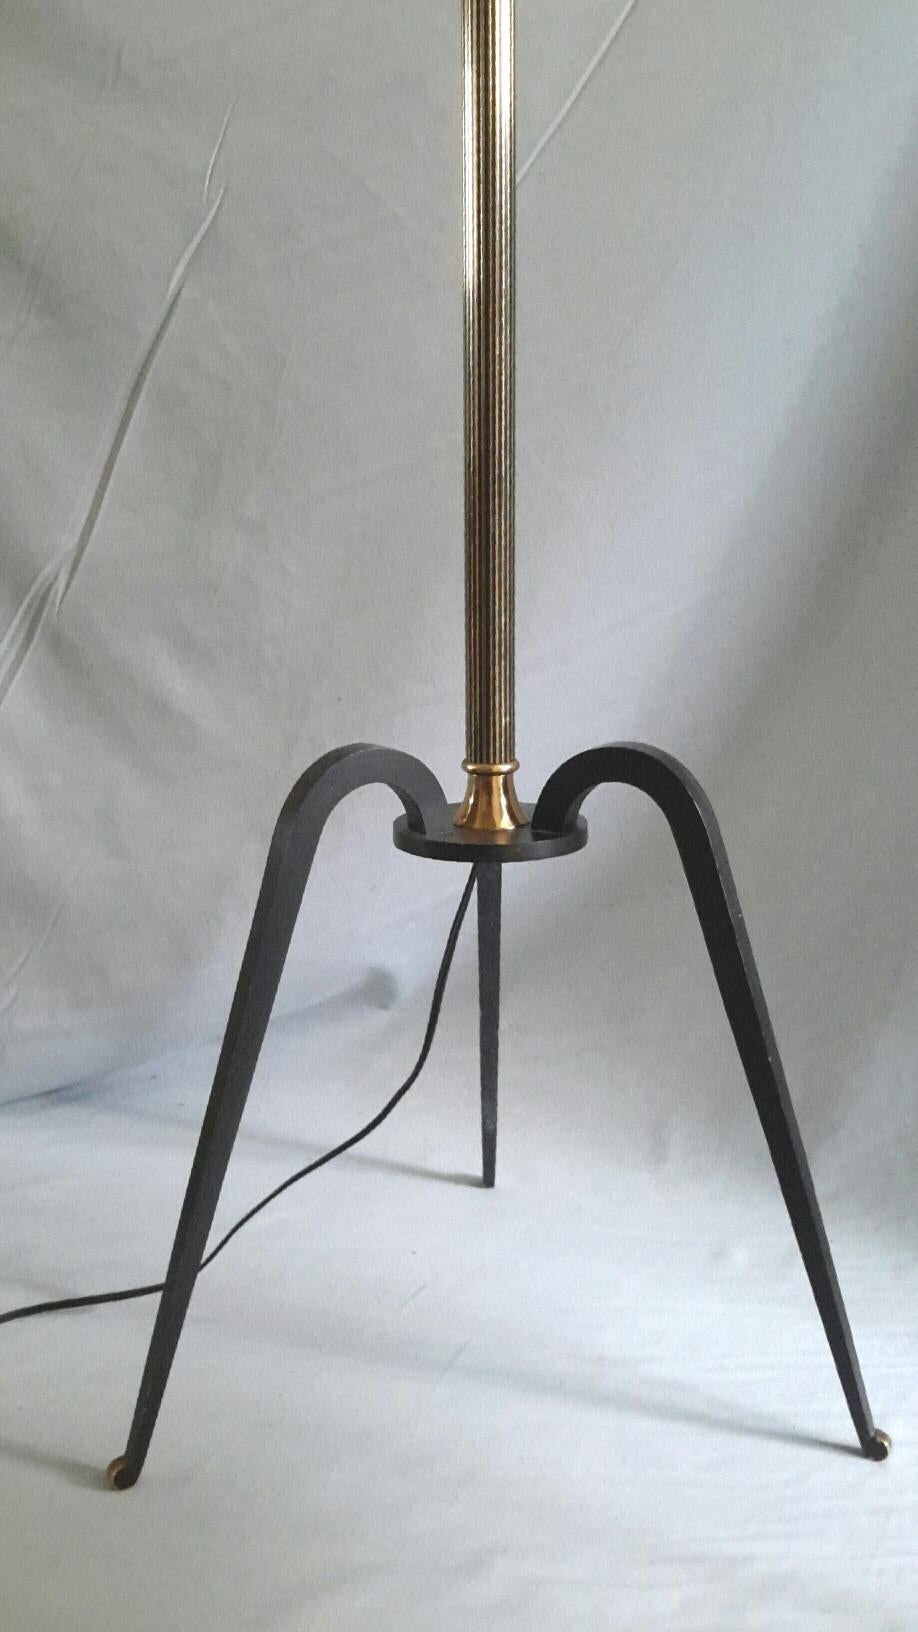 Elegant French Mid-Century Modern Bronze Lamp Floor by Arlus, 1950s For Sale 2